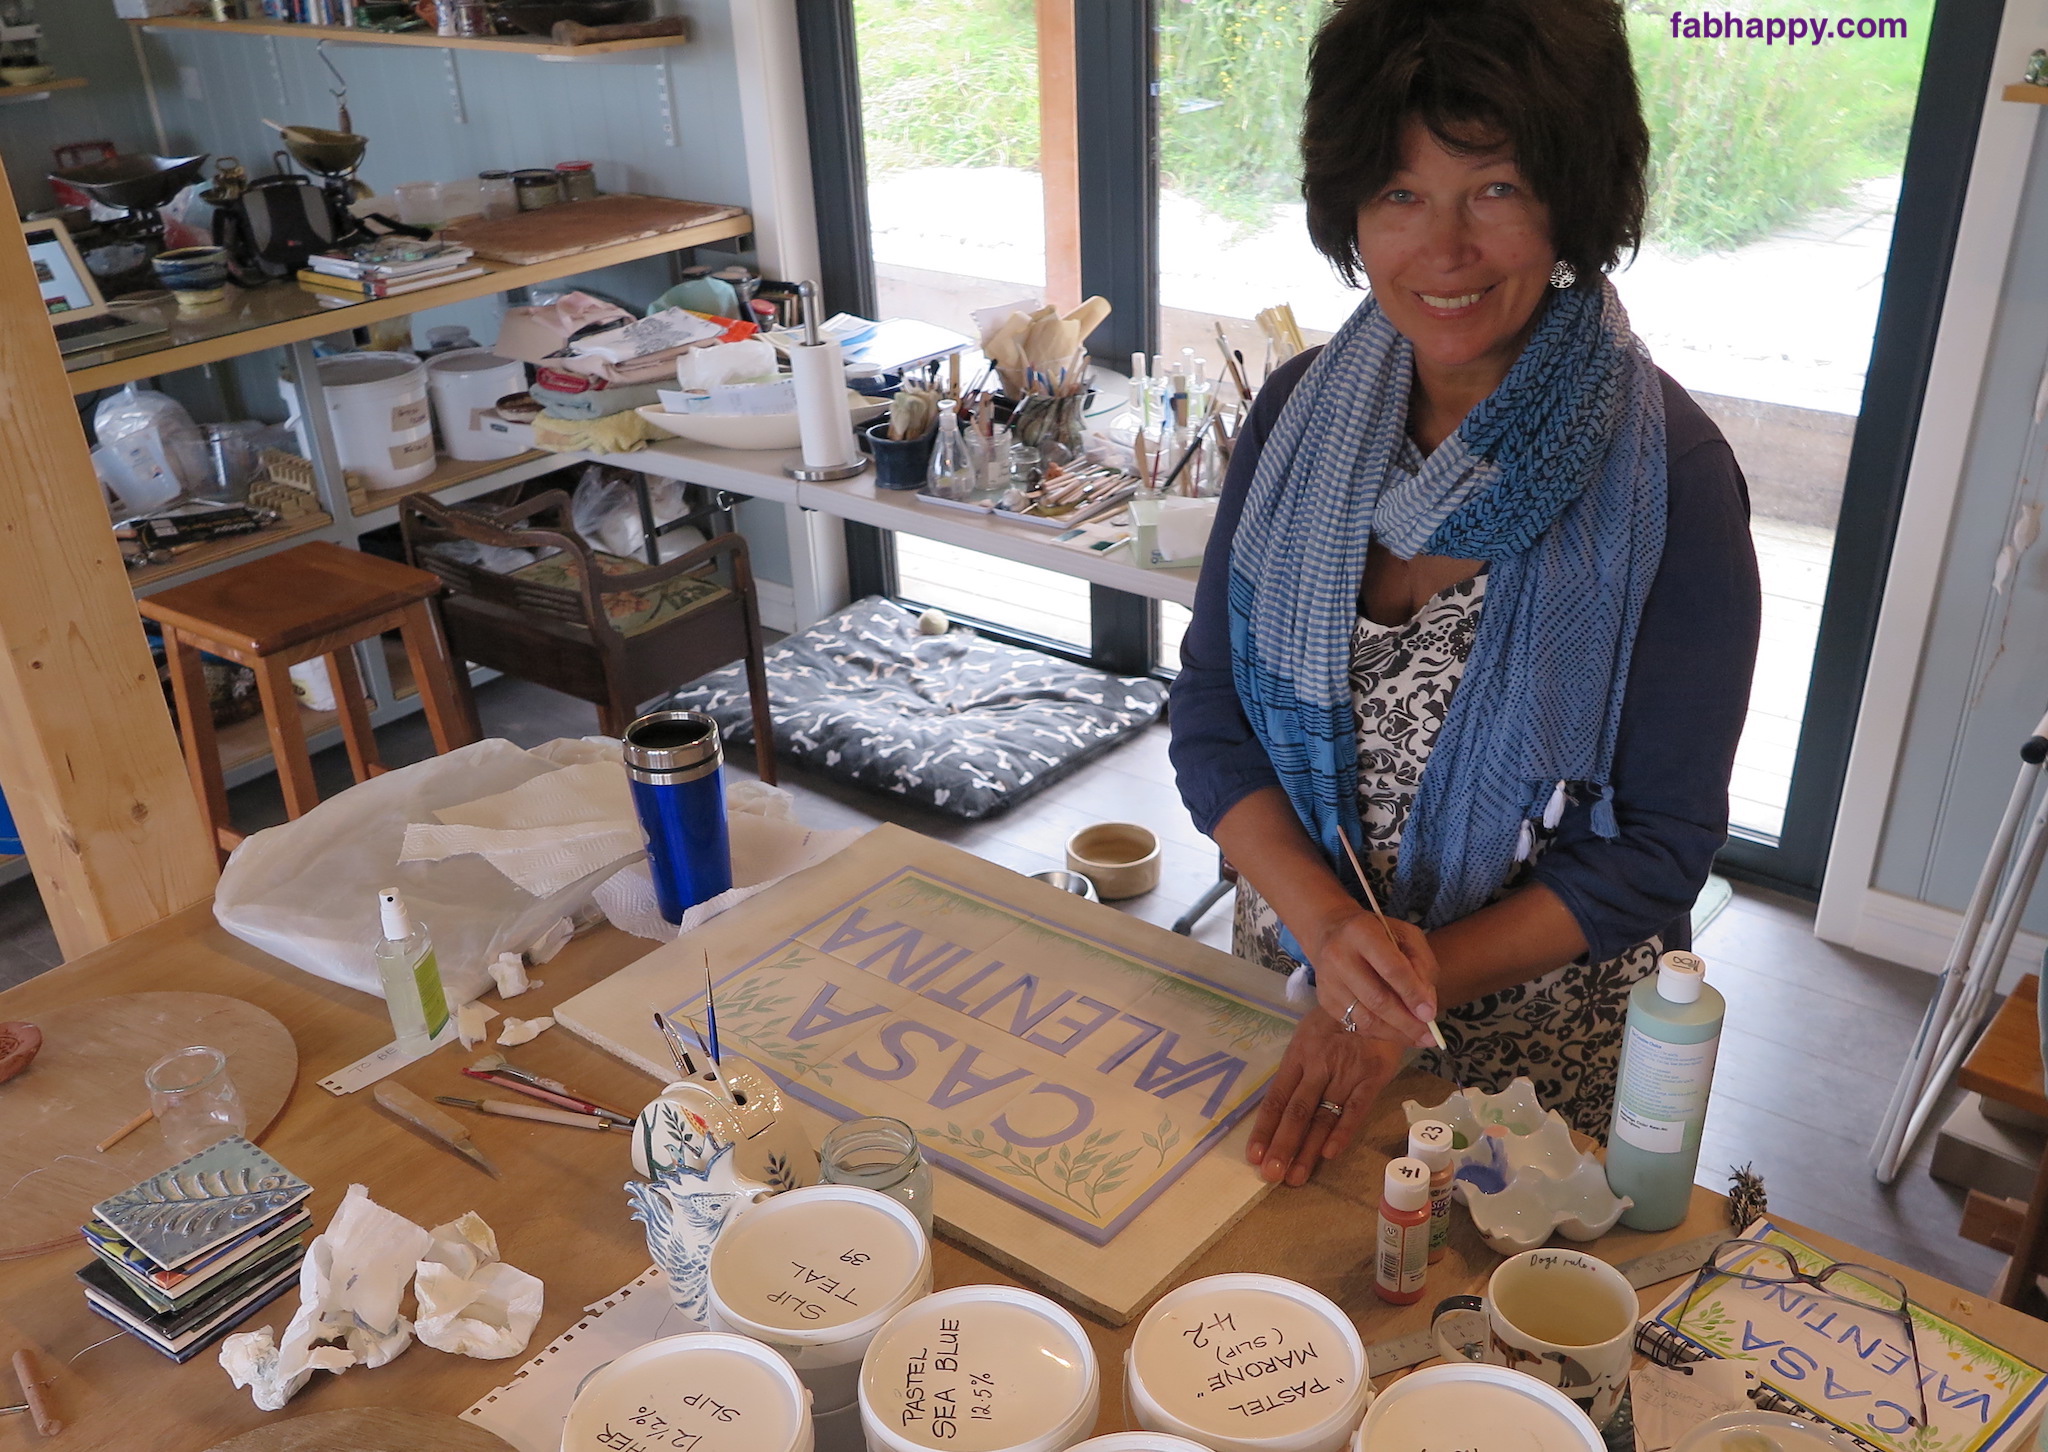 Gloria painting the ceramic house sign